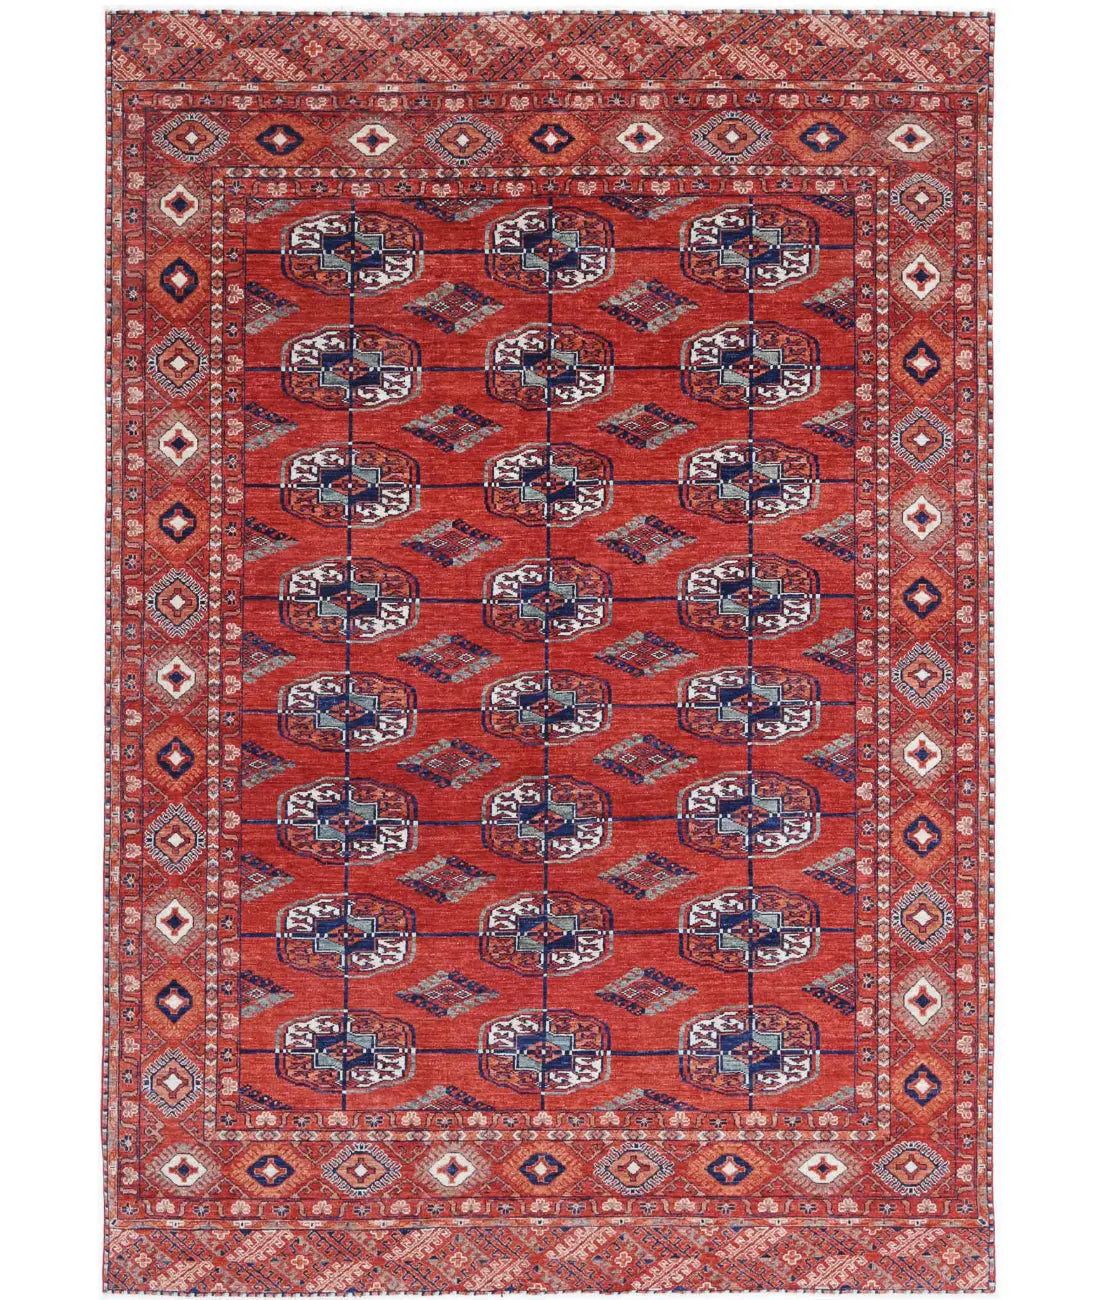 Hand Knotted Nomadic Caucasian Humna Wool Rug - 6'7'' x 9'7'' - Arteverk Rugs Area rug